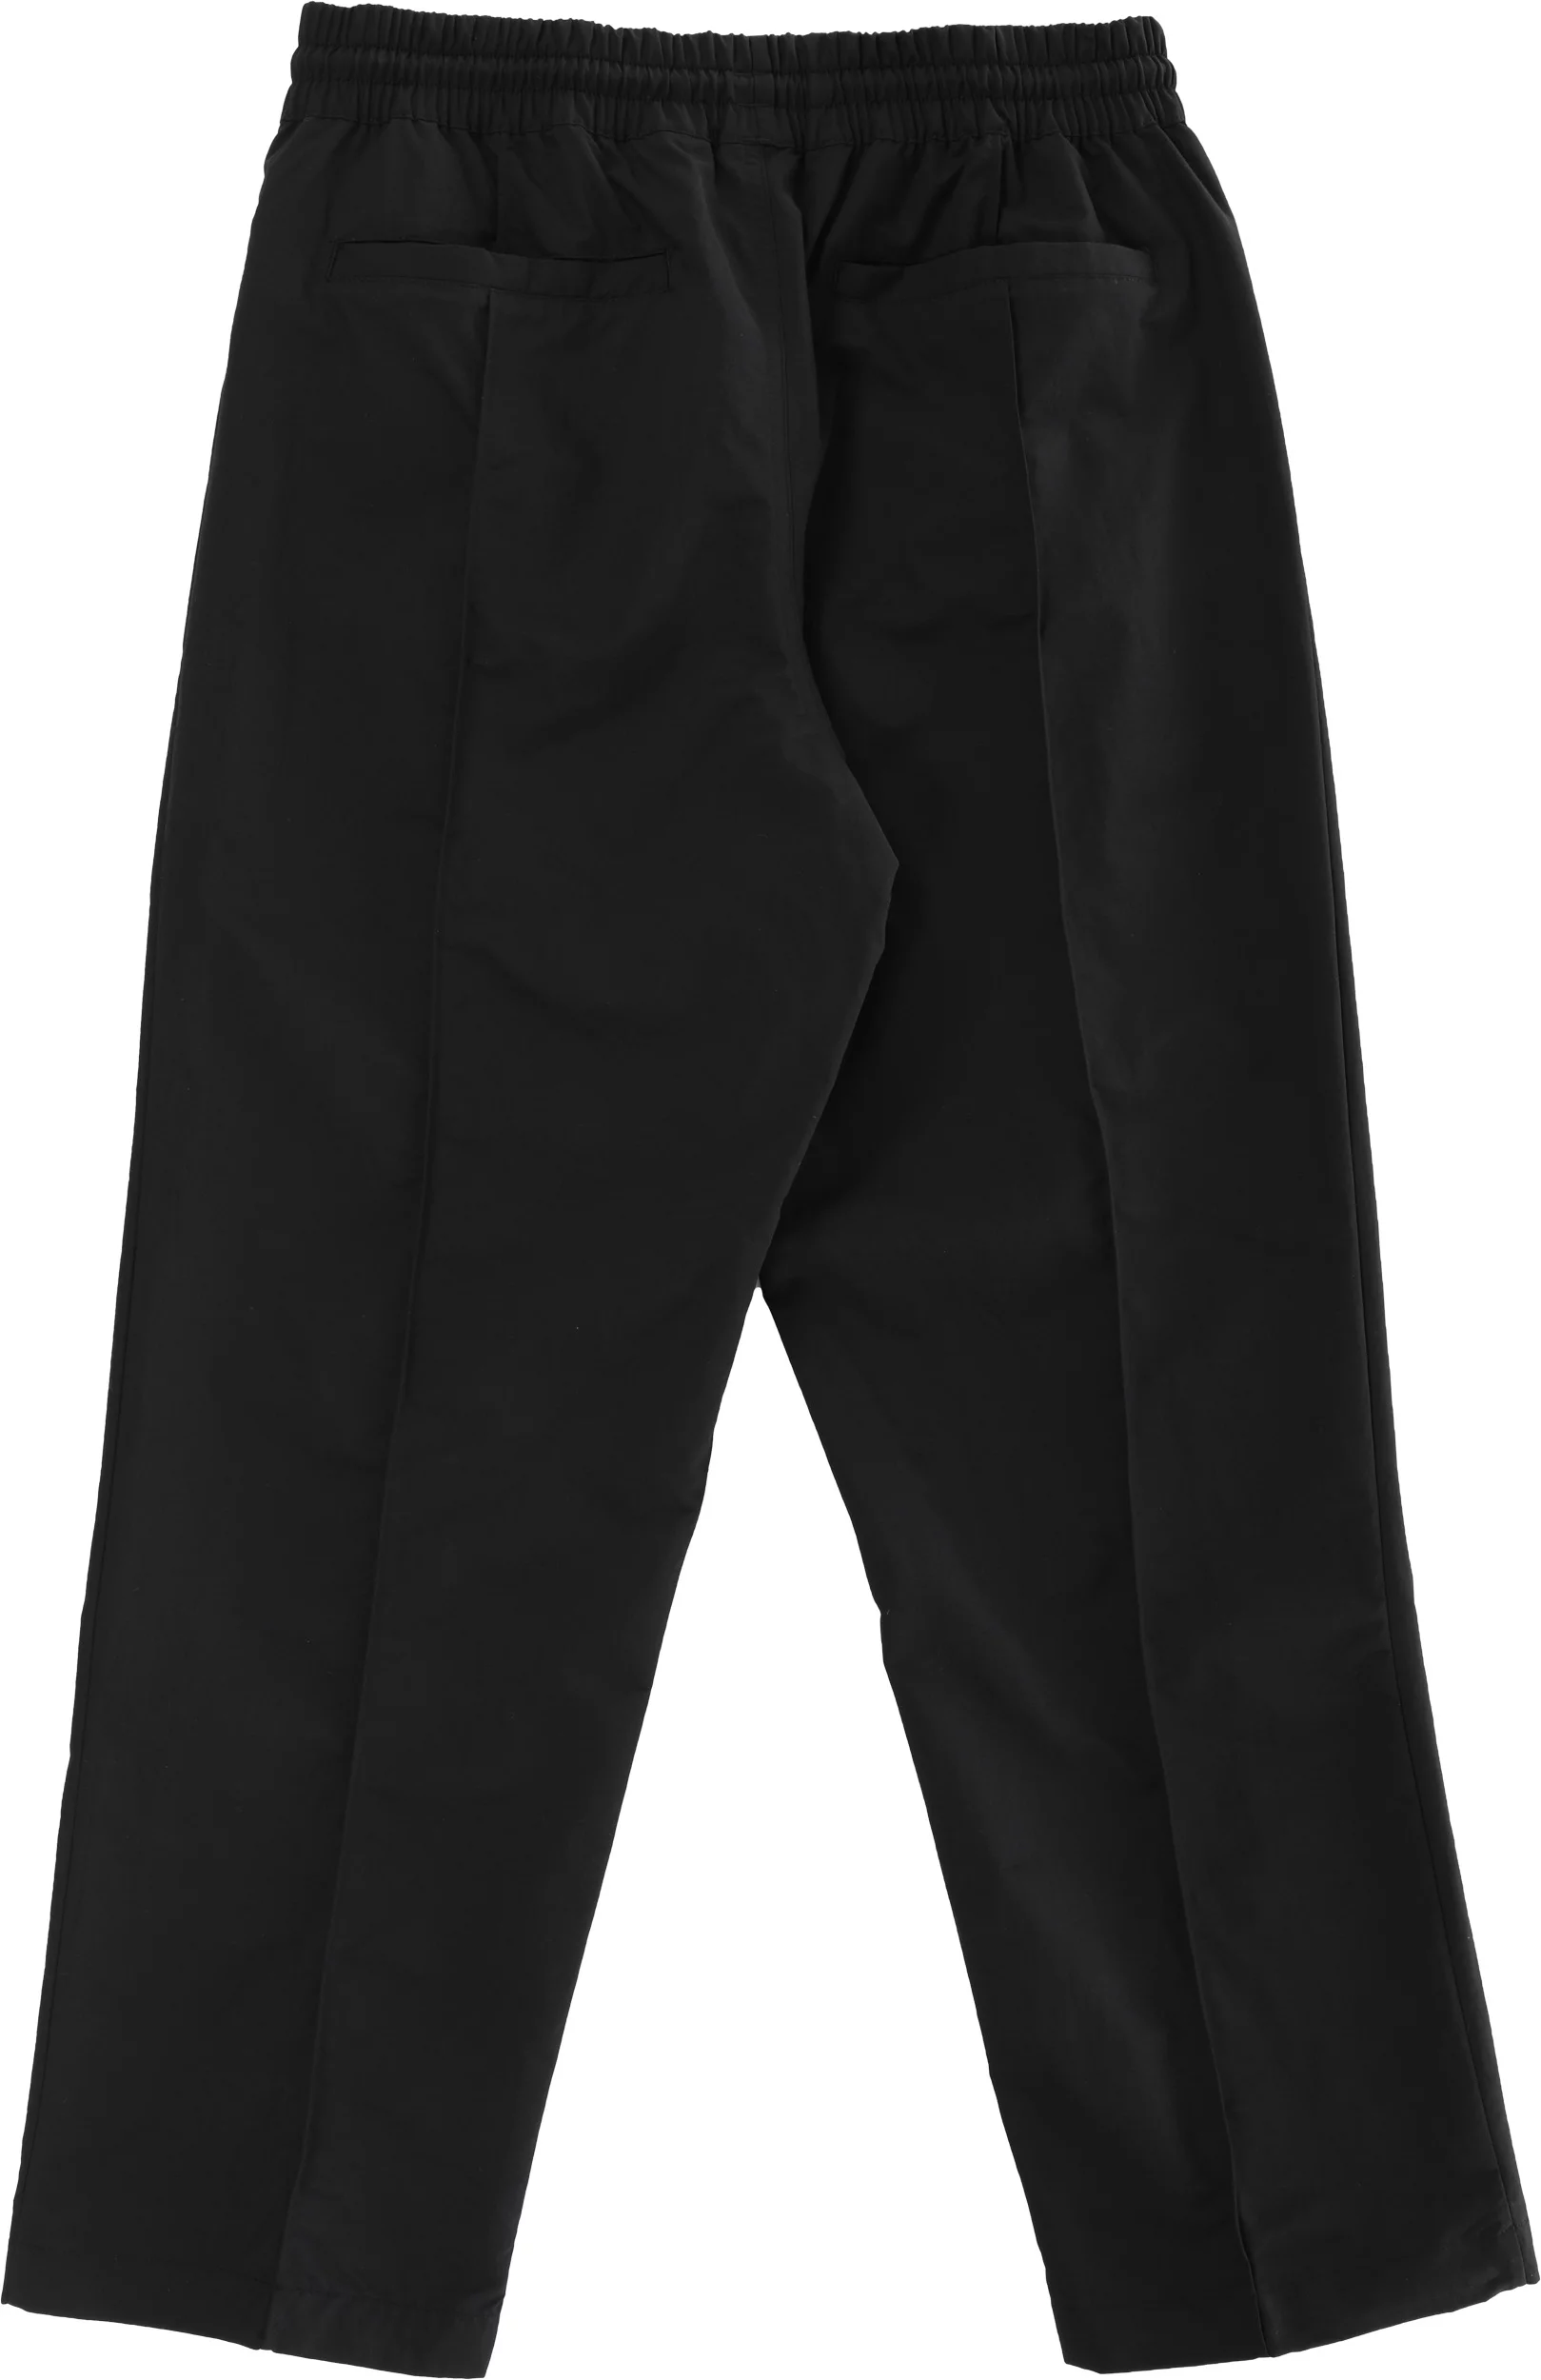 adidas Pintuck Pull-On Golf Pants - Black